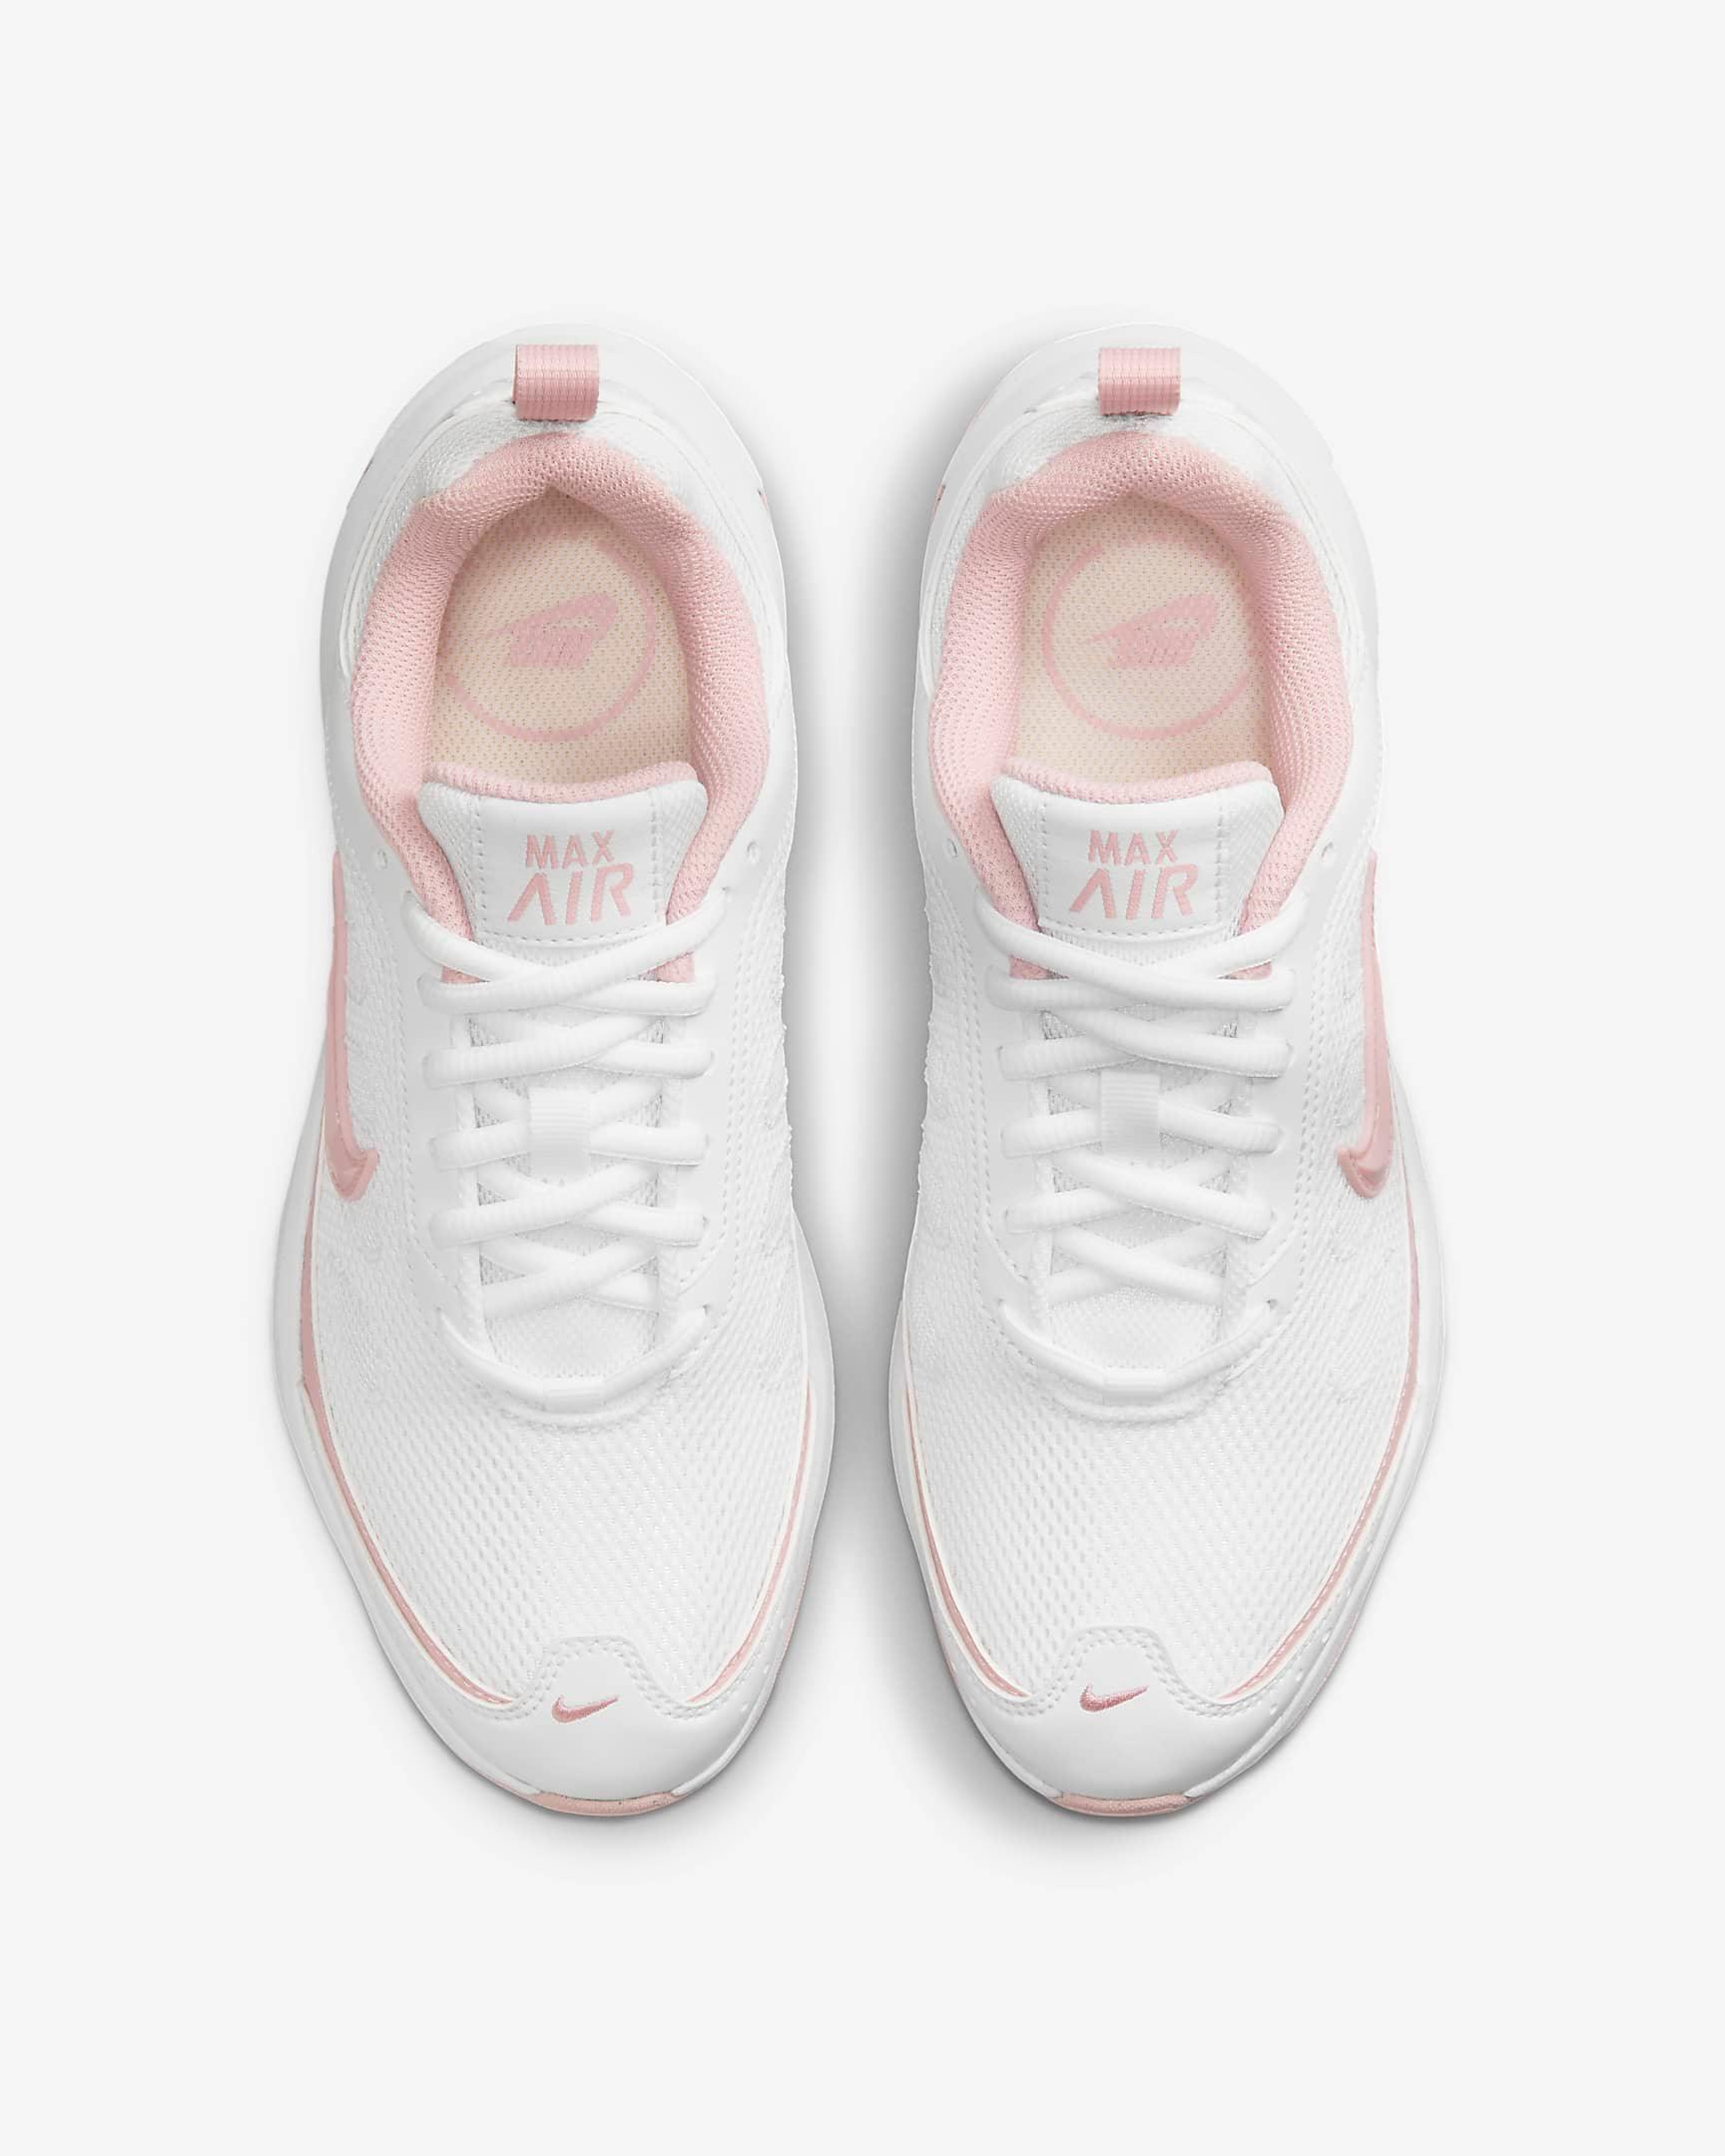 Giày Nike Air Max AP Women Shoes #Pink Glaze - Kallos Vietnam